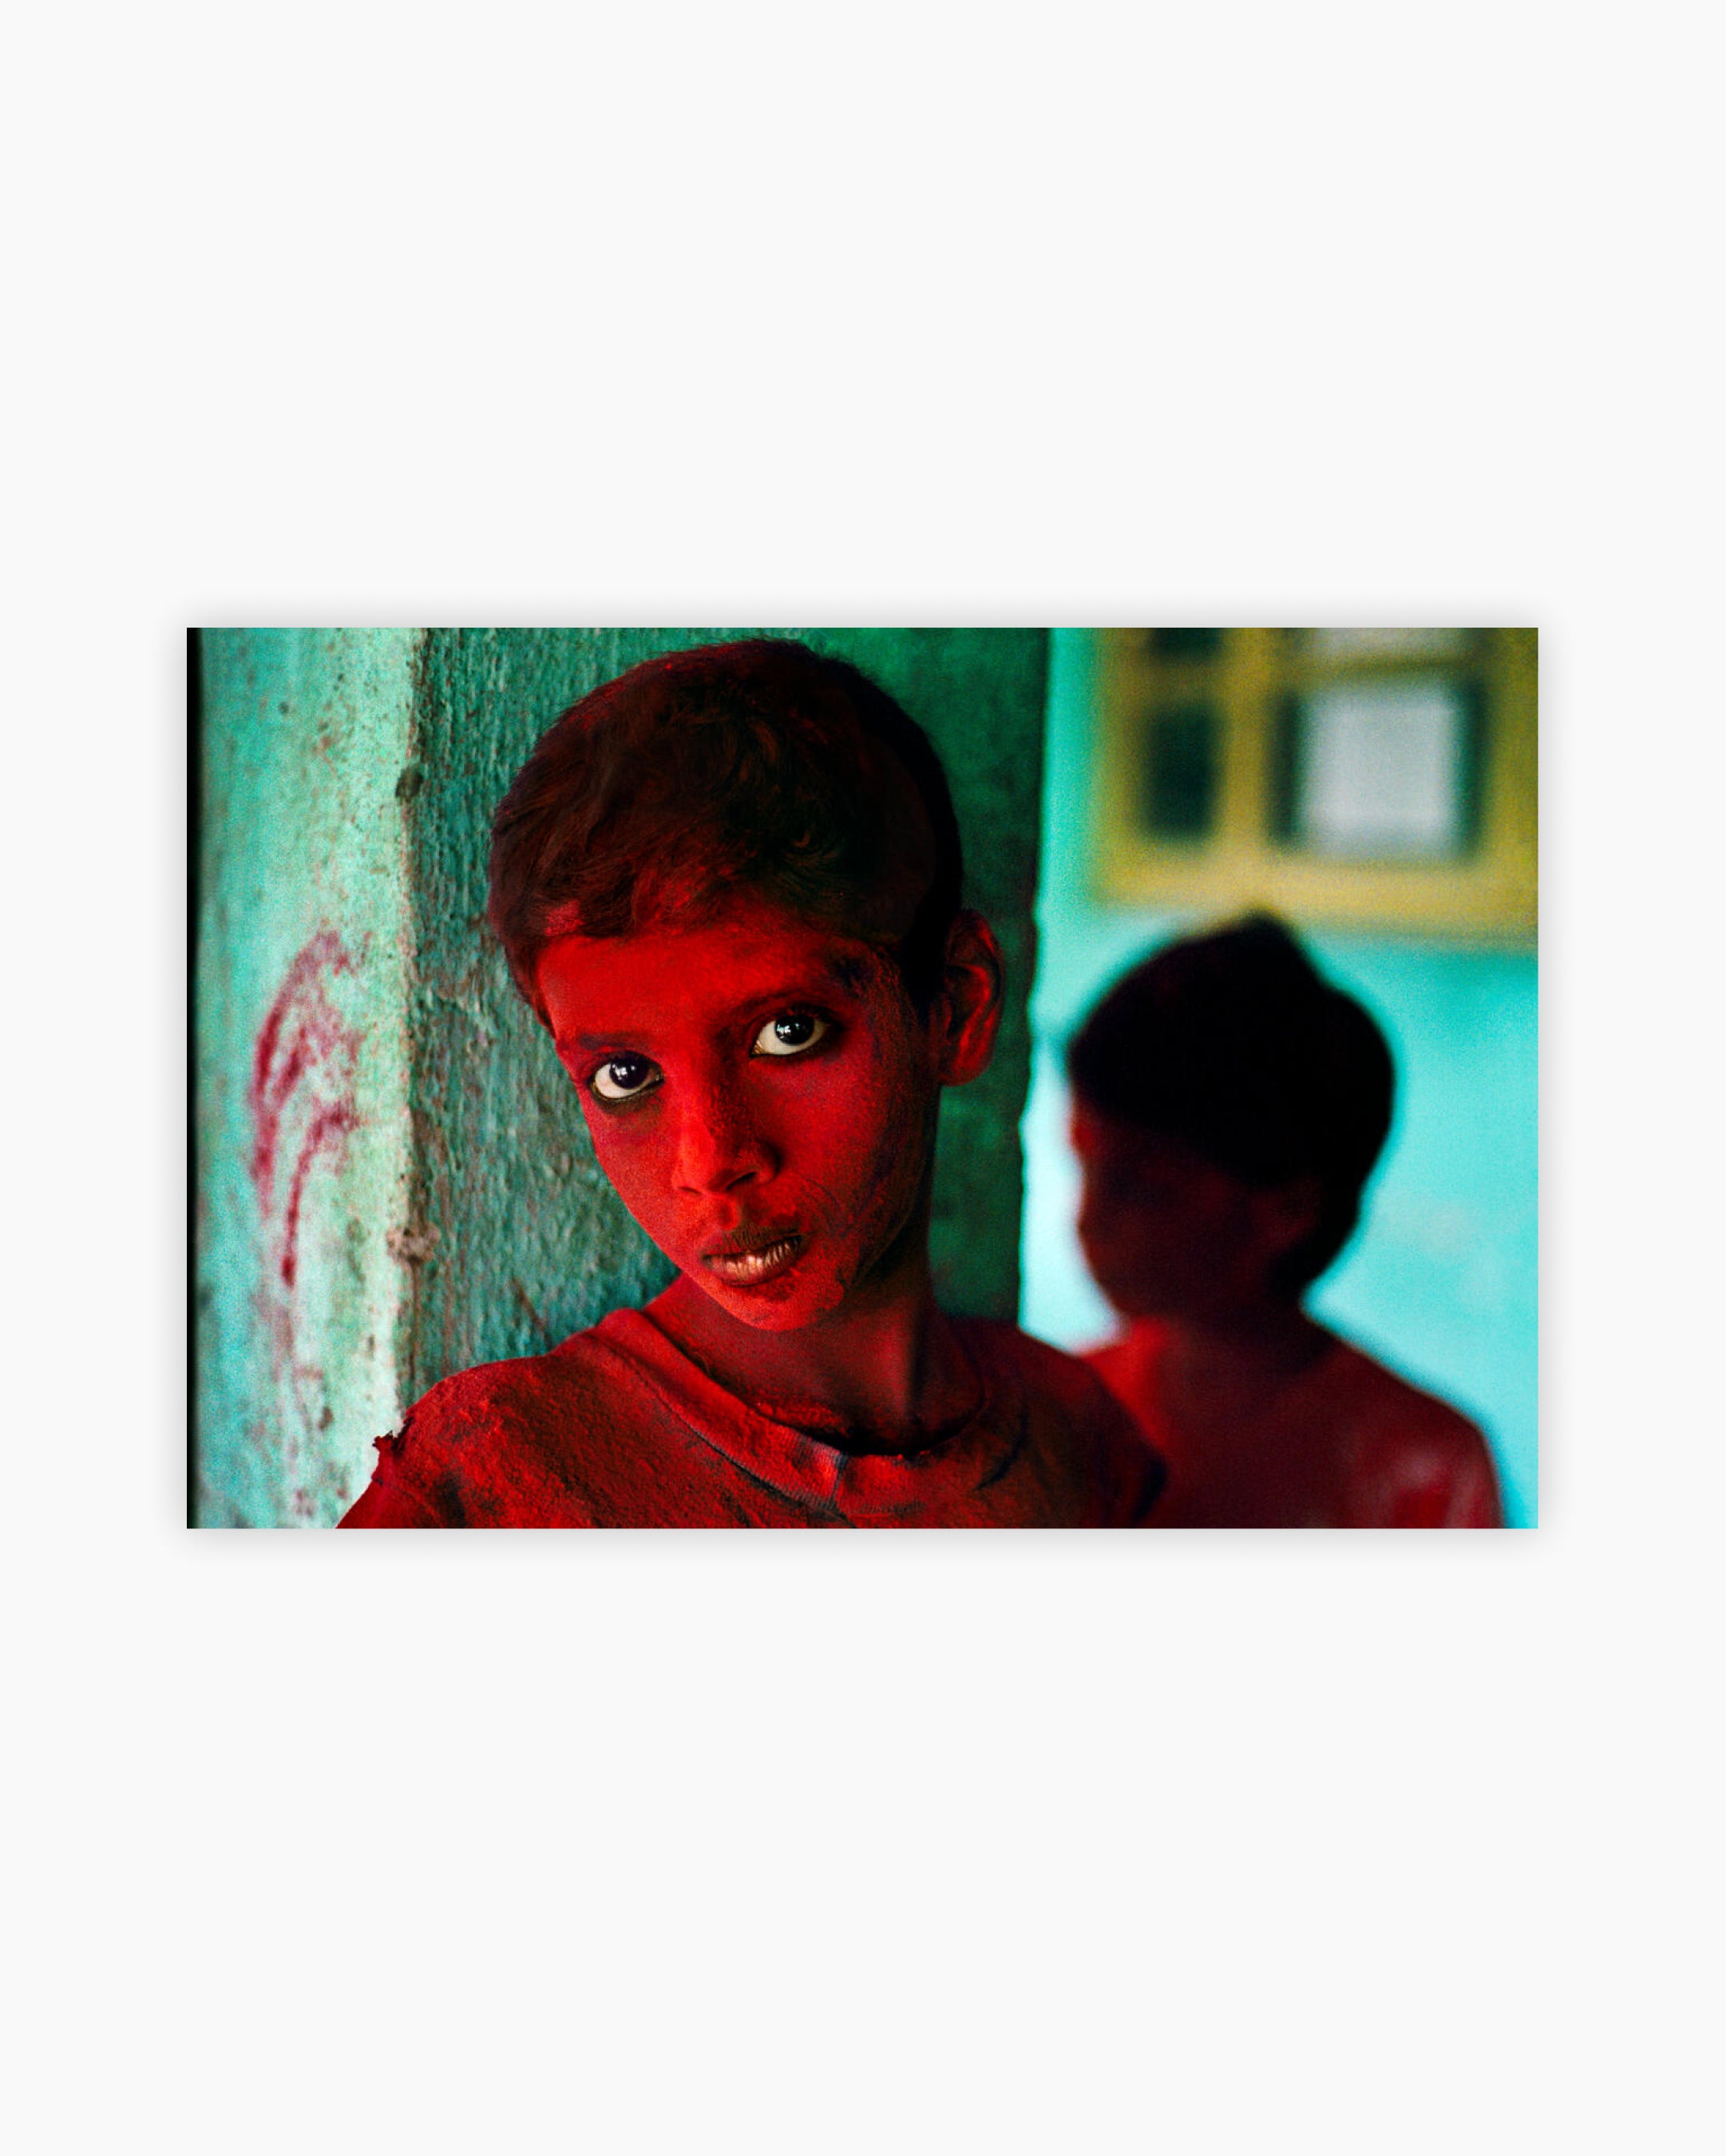 A boy at the Festival of Ganesh Chaturthi. Mumbai, India, 1996